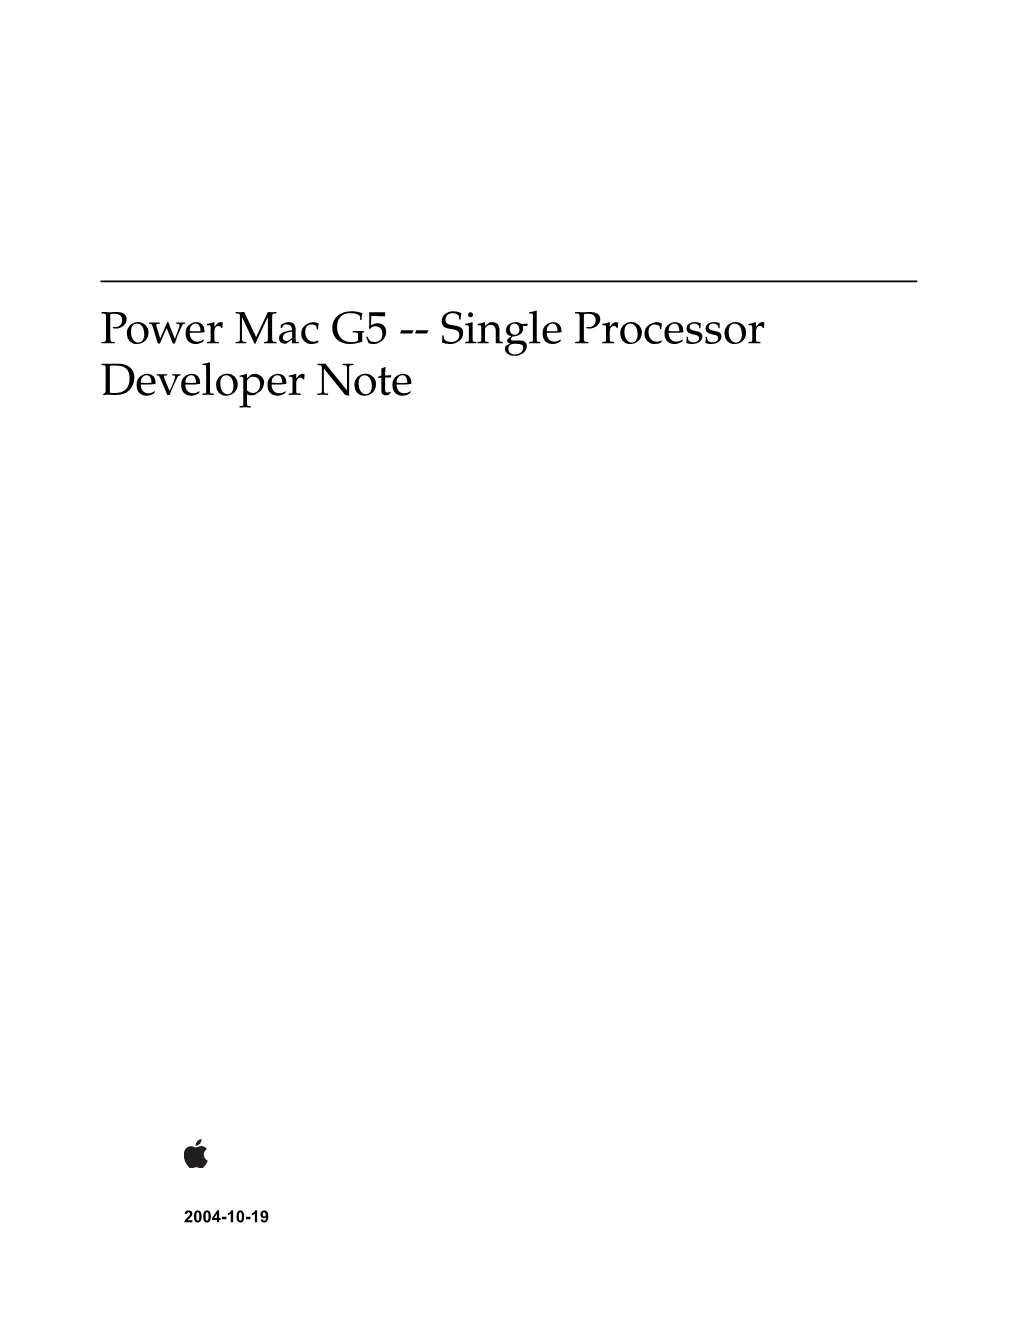 Power Mac G5 -- Single Processor Developer Note